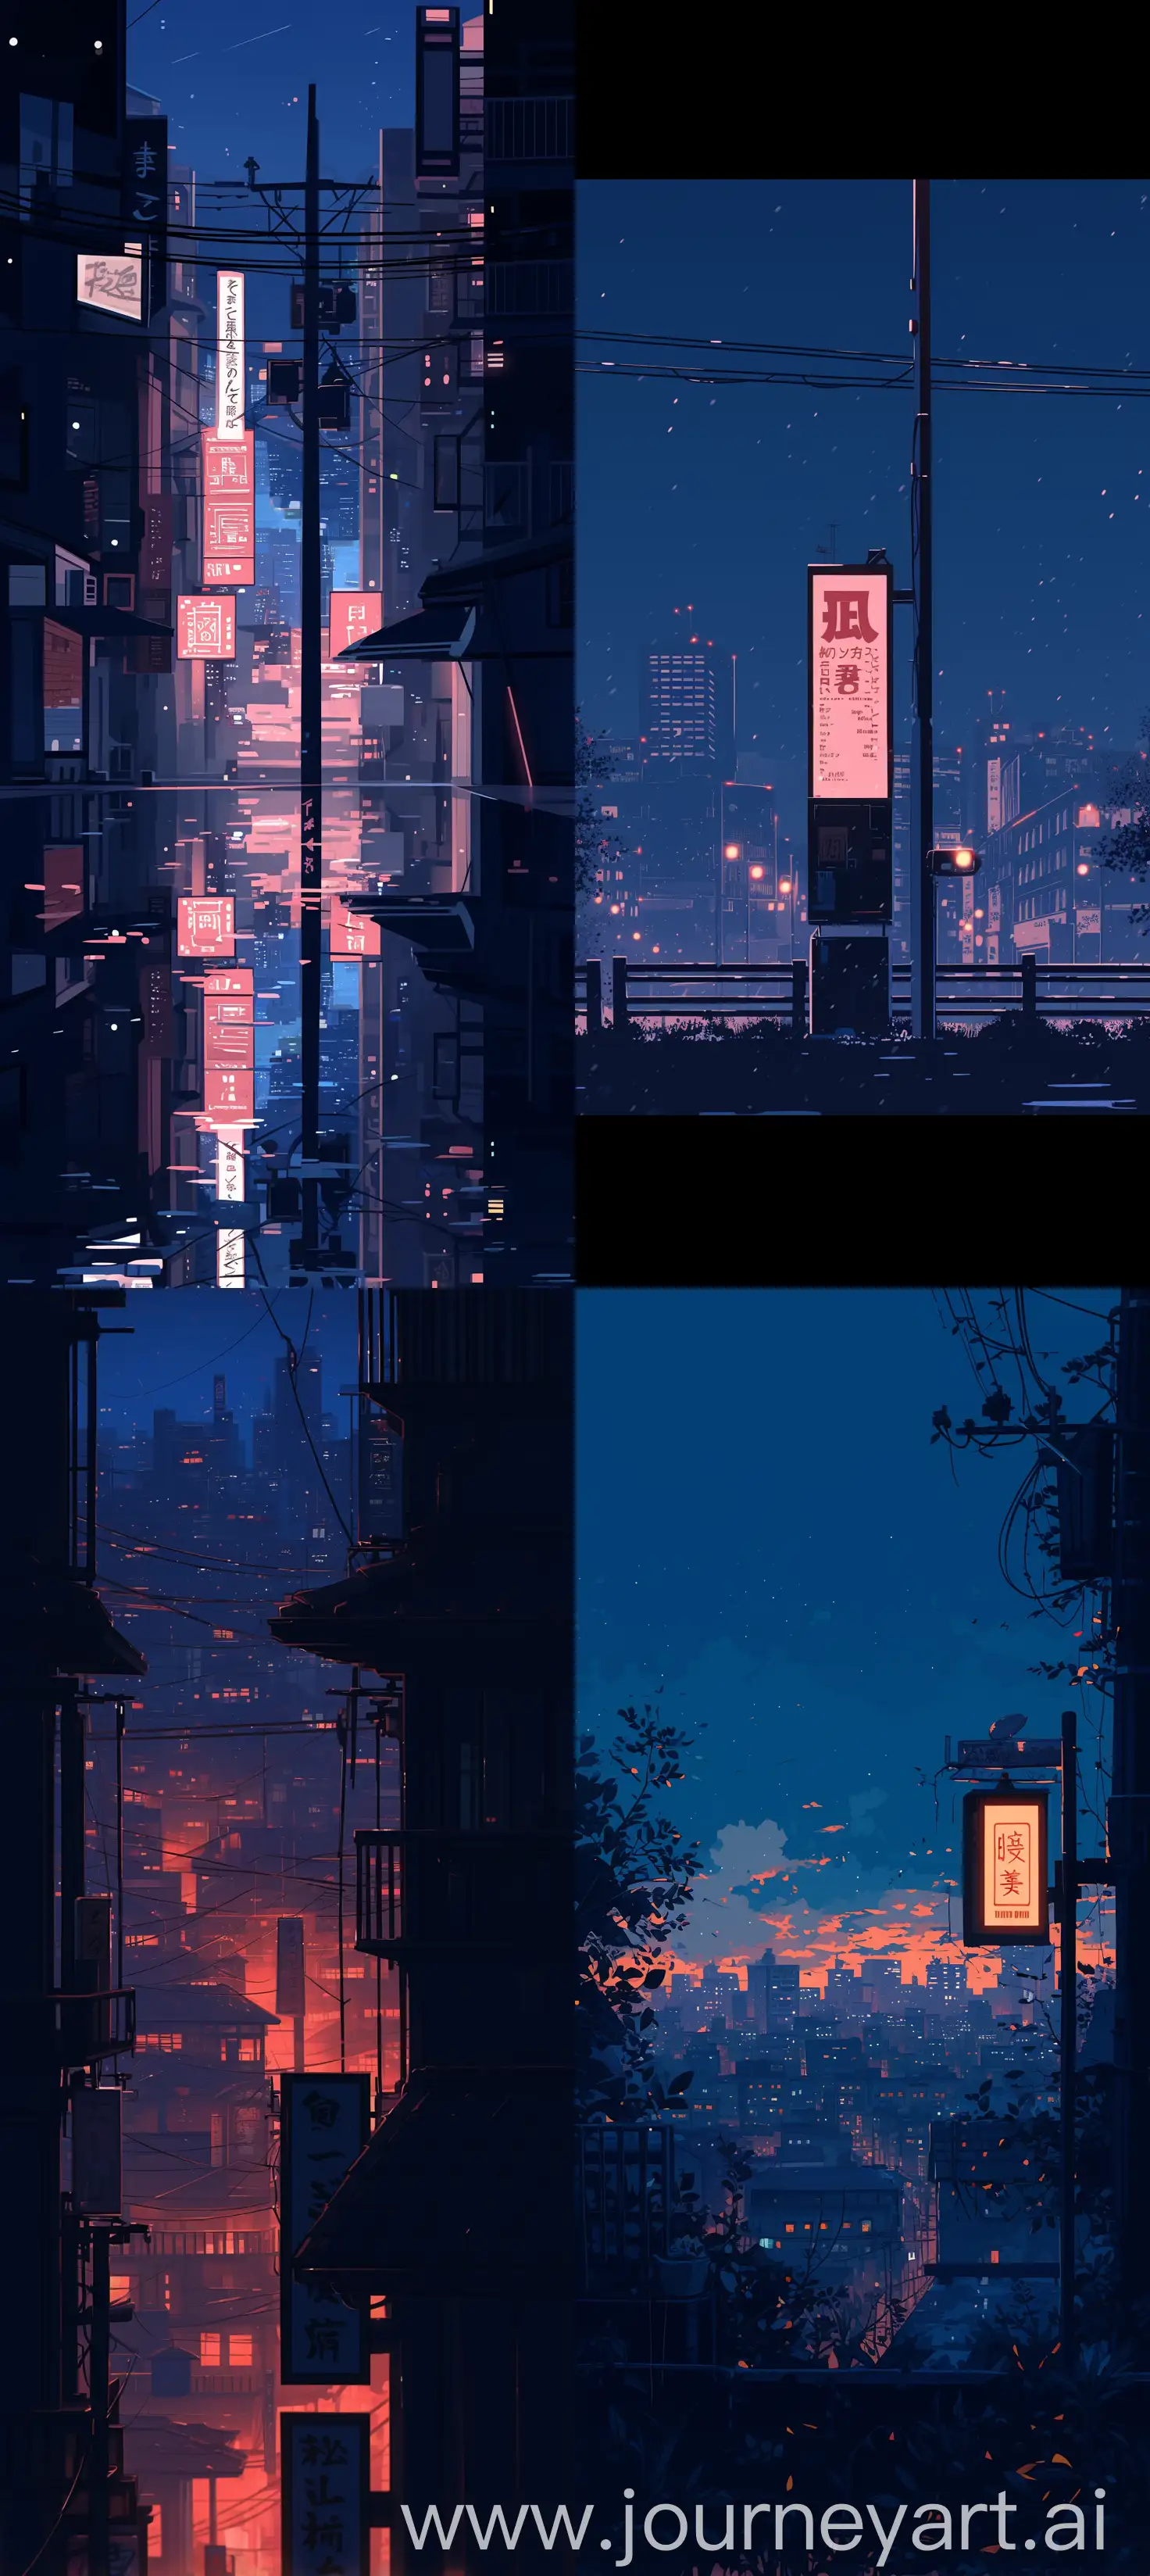 Serene-Anime-Cityscape-Minimalistic-Japanese-Night-Scene-with-Single-Illuminated-Signboard